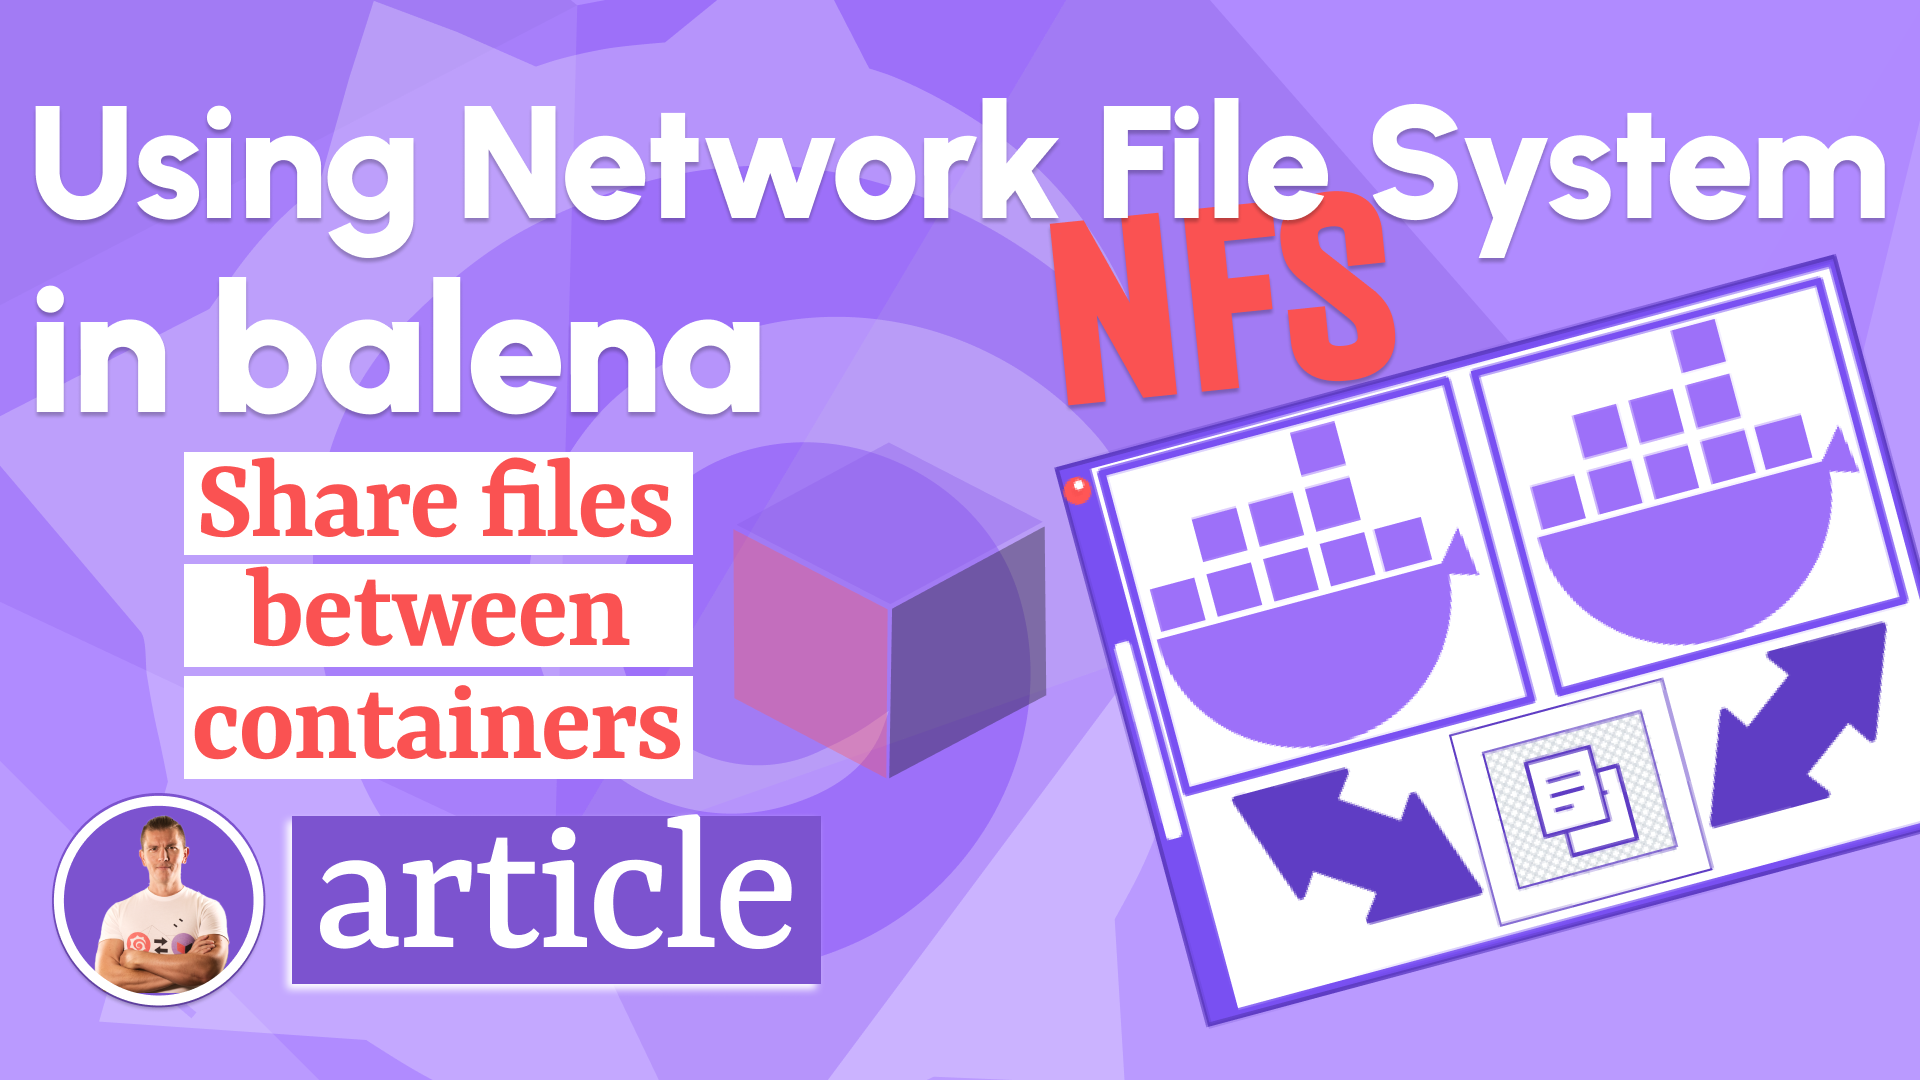 Balena NFS Server Project